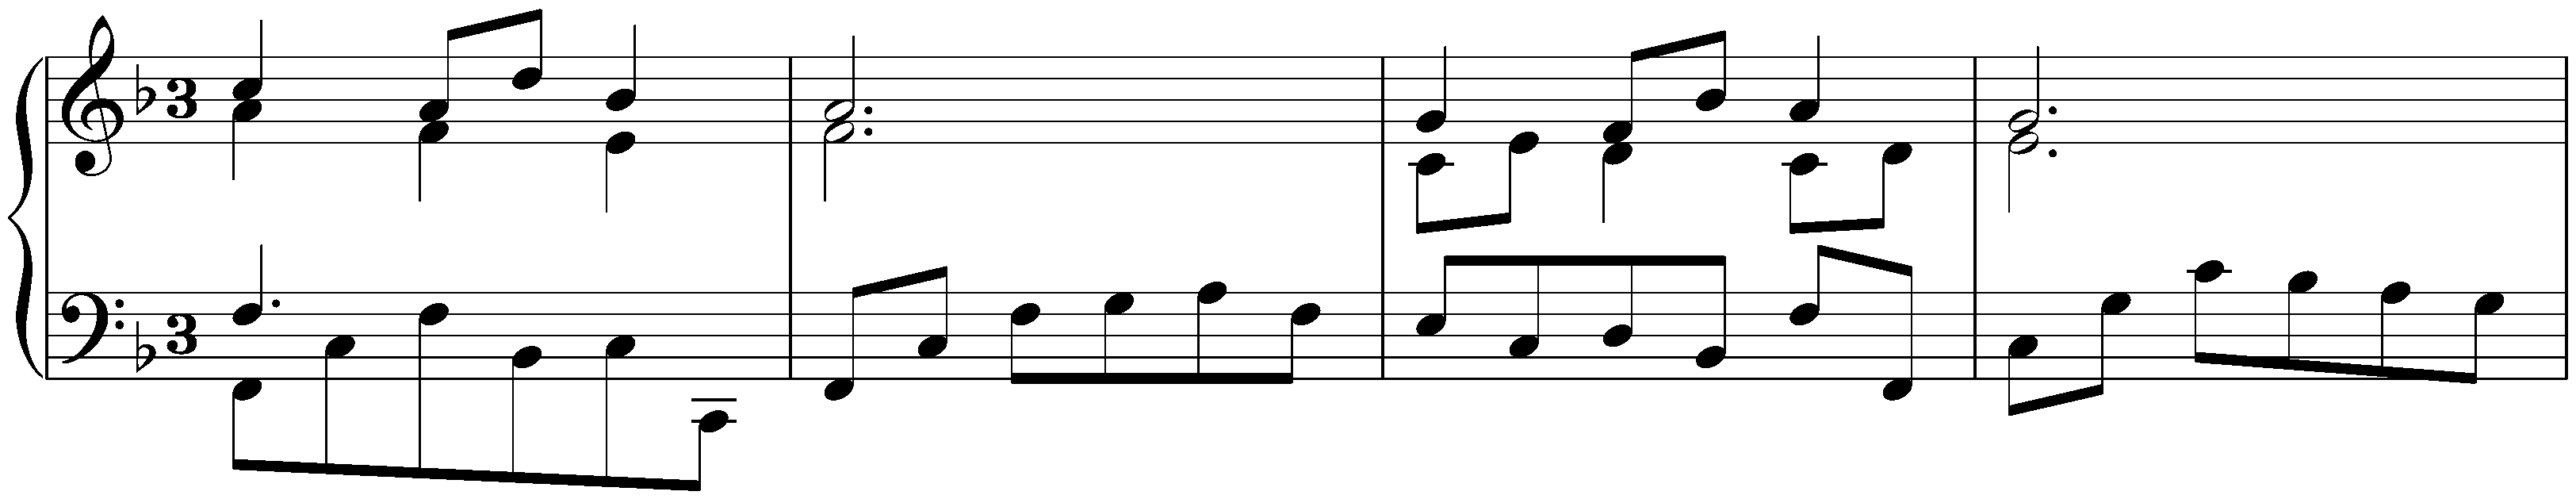 Overture (Suite) in F major, BWV 820; 3. Menuet – Trio